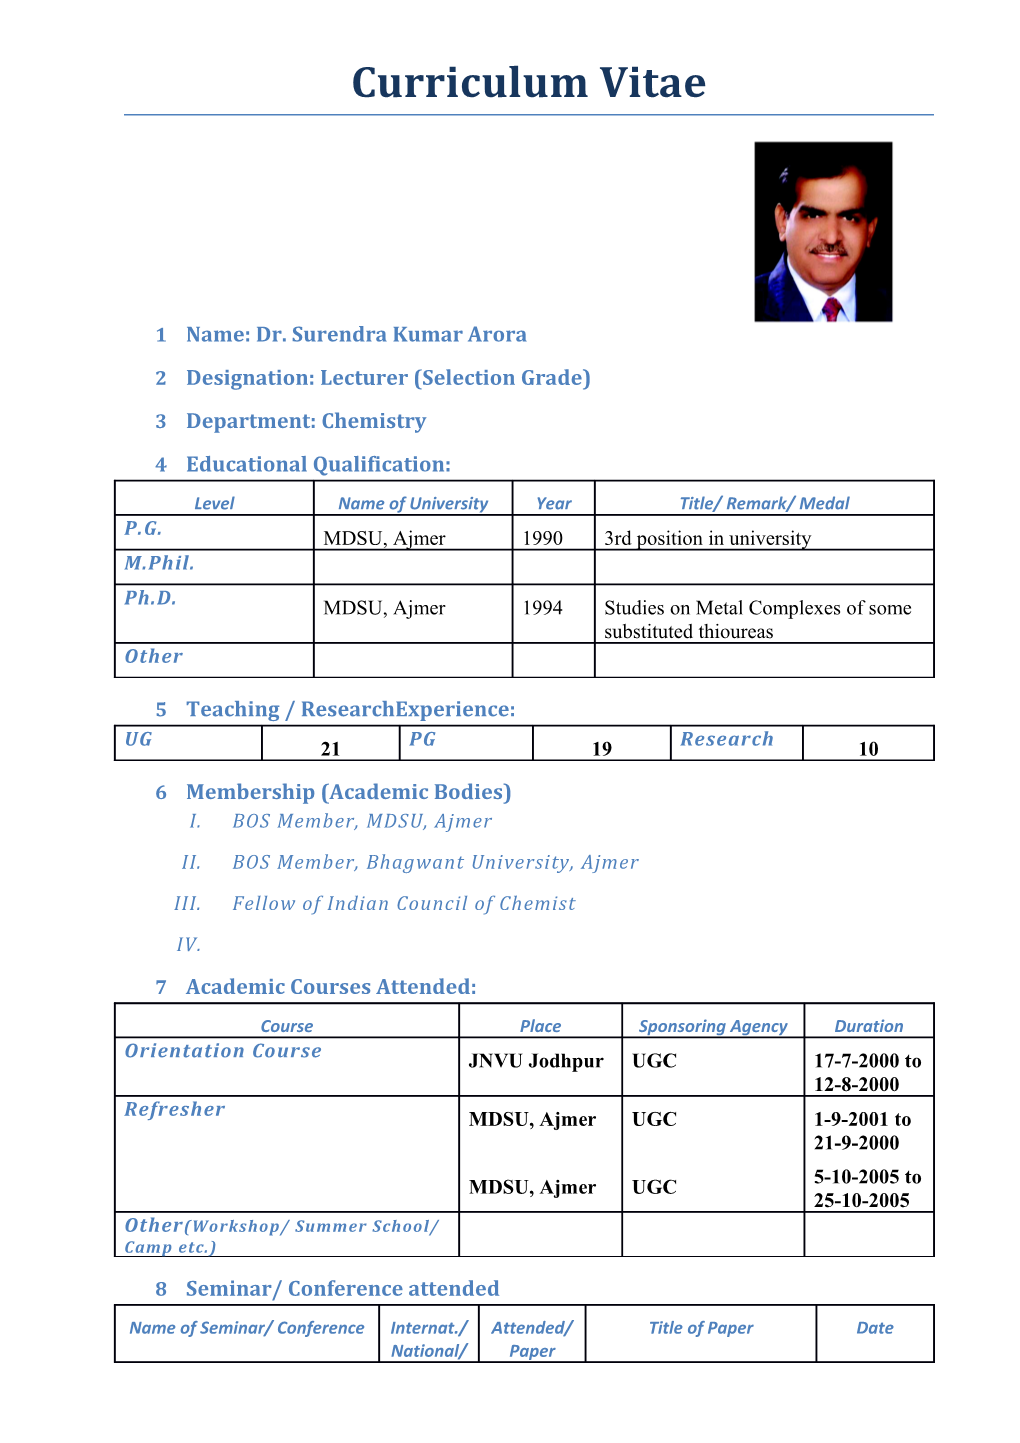 1 Name: Dr. Surendra Kumar Arora